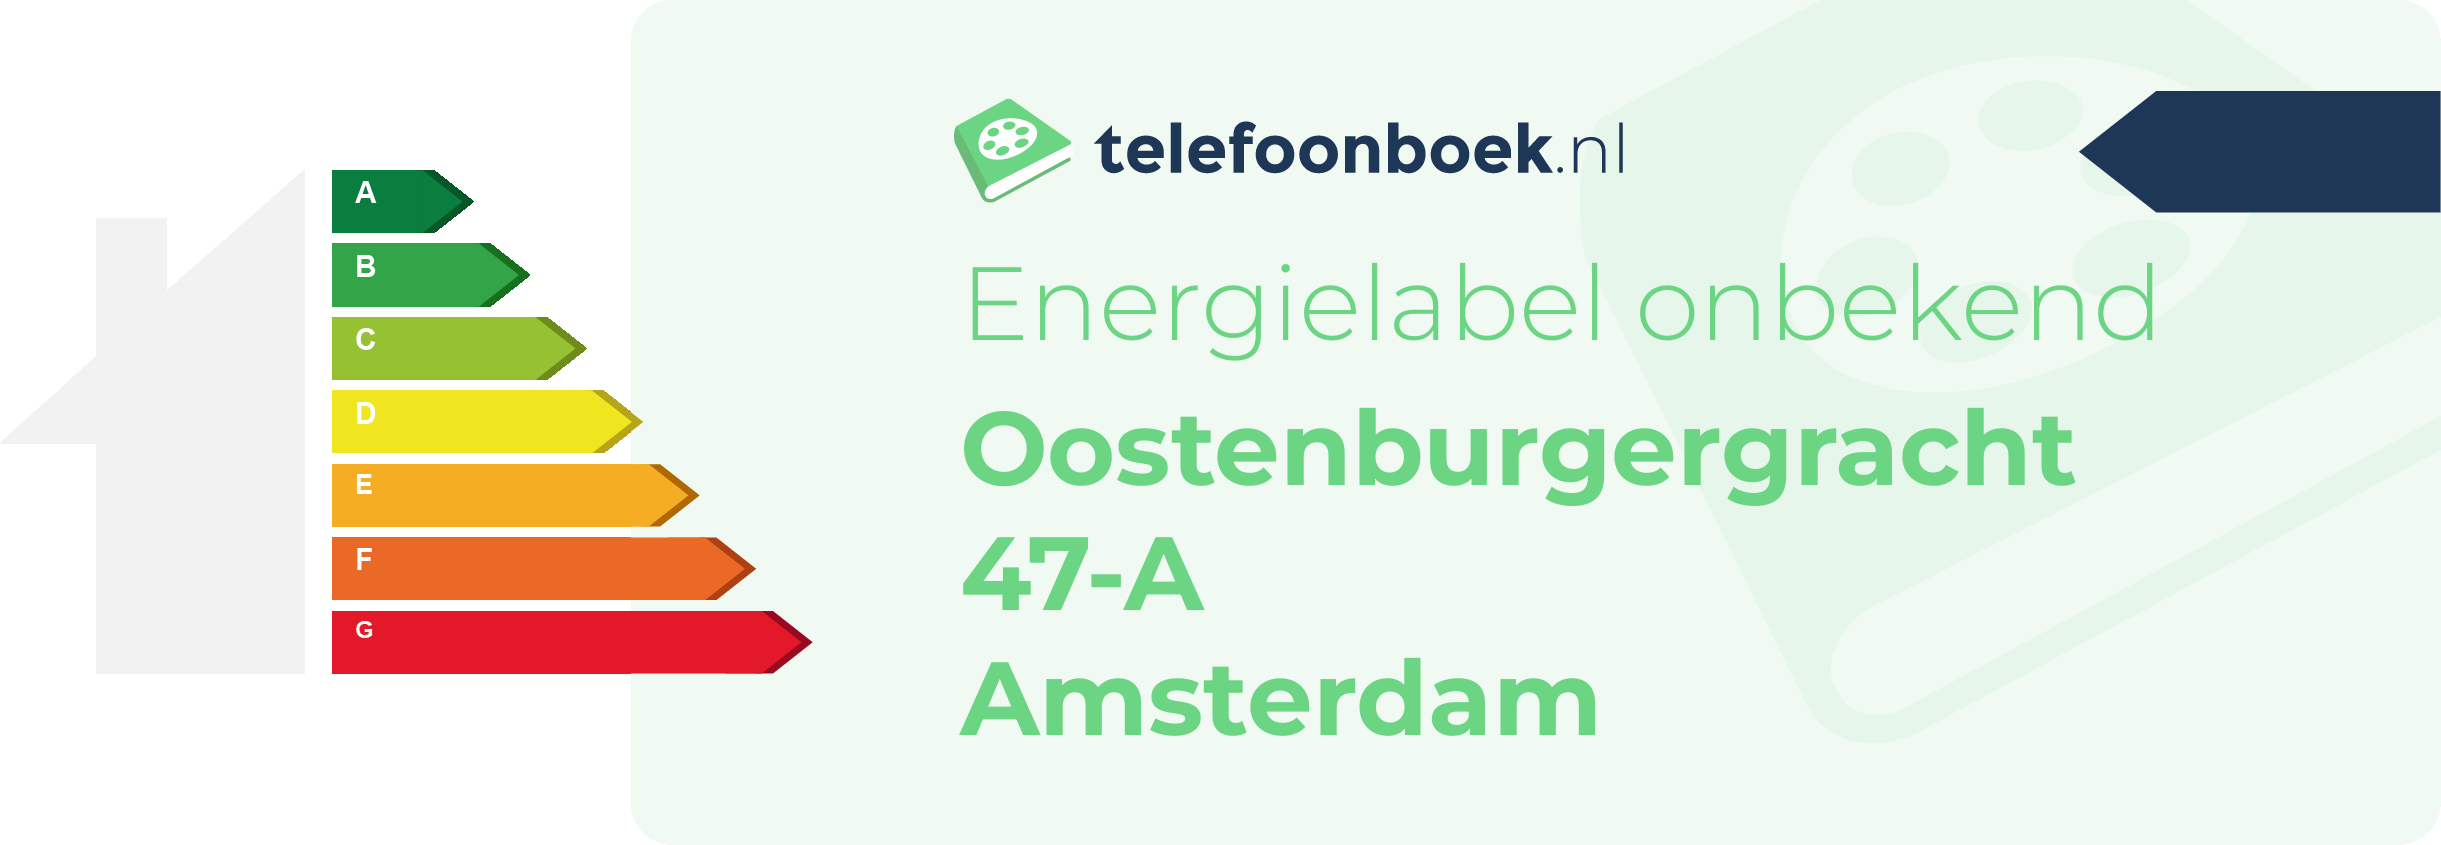 Energielabel Oostenburgergracht 47-A Amsterdam